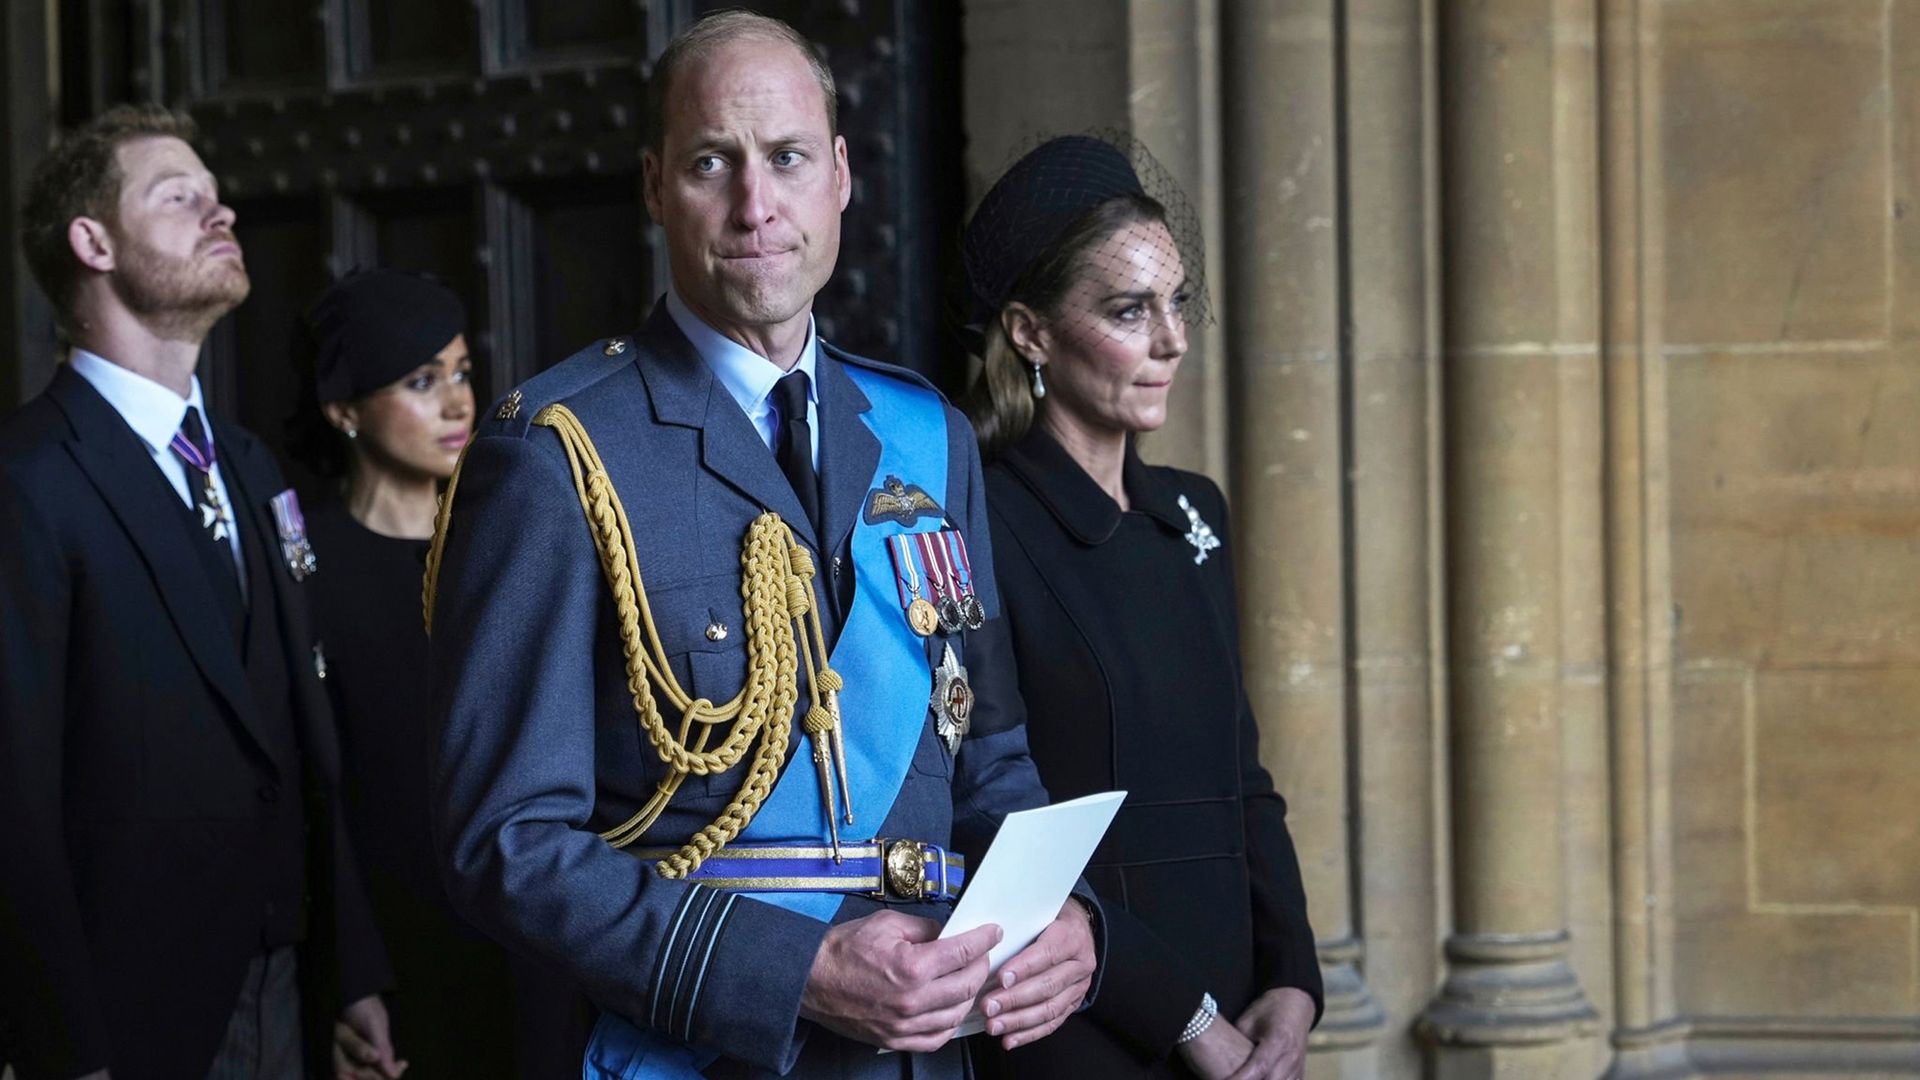 Prince William at Queen Elizabeth II's funeral